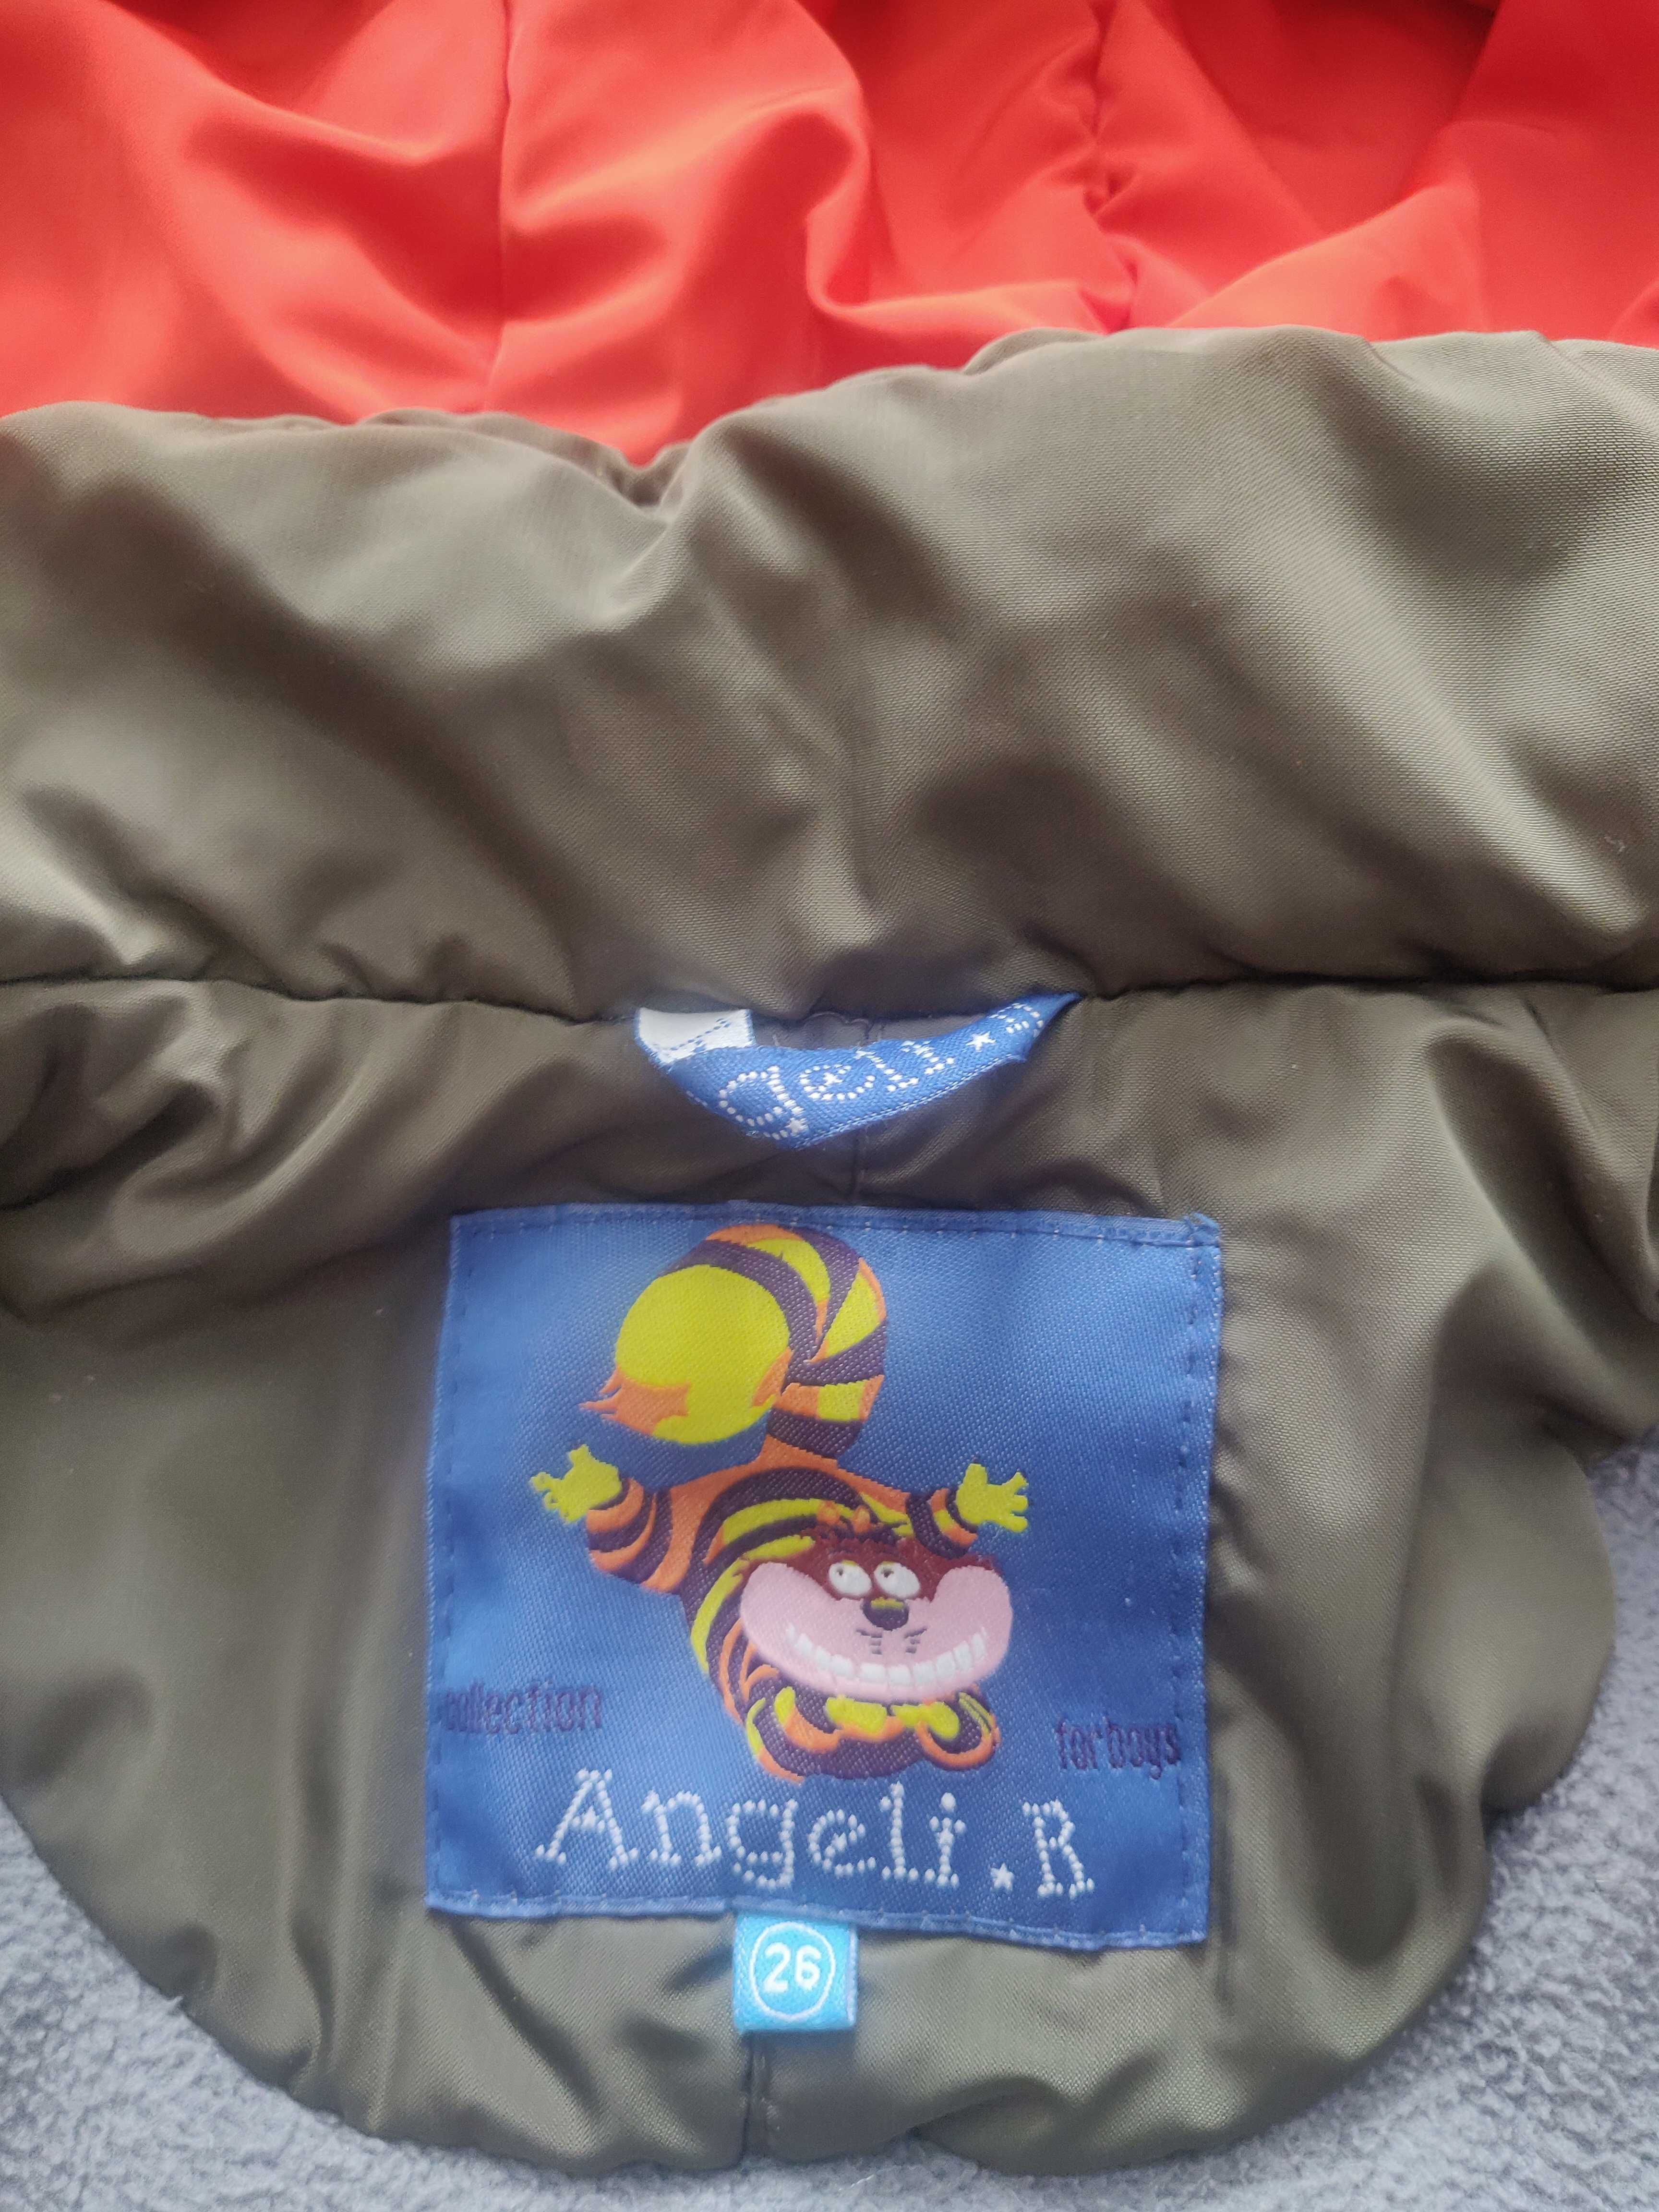 Kуртка Collection for boys Angeli.R р.26 5-7 лет, зеленая (цвет хвои)